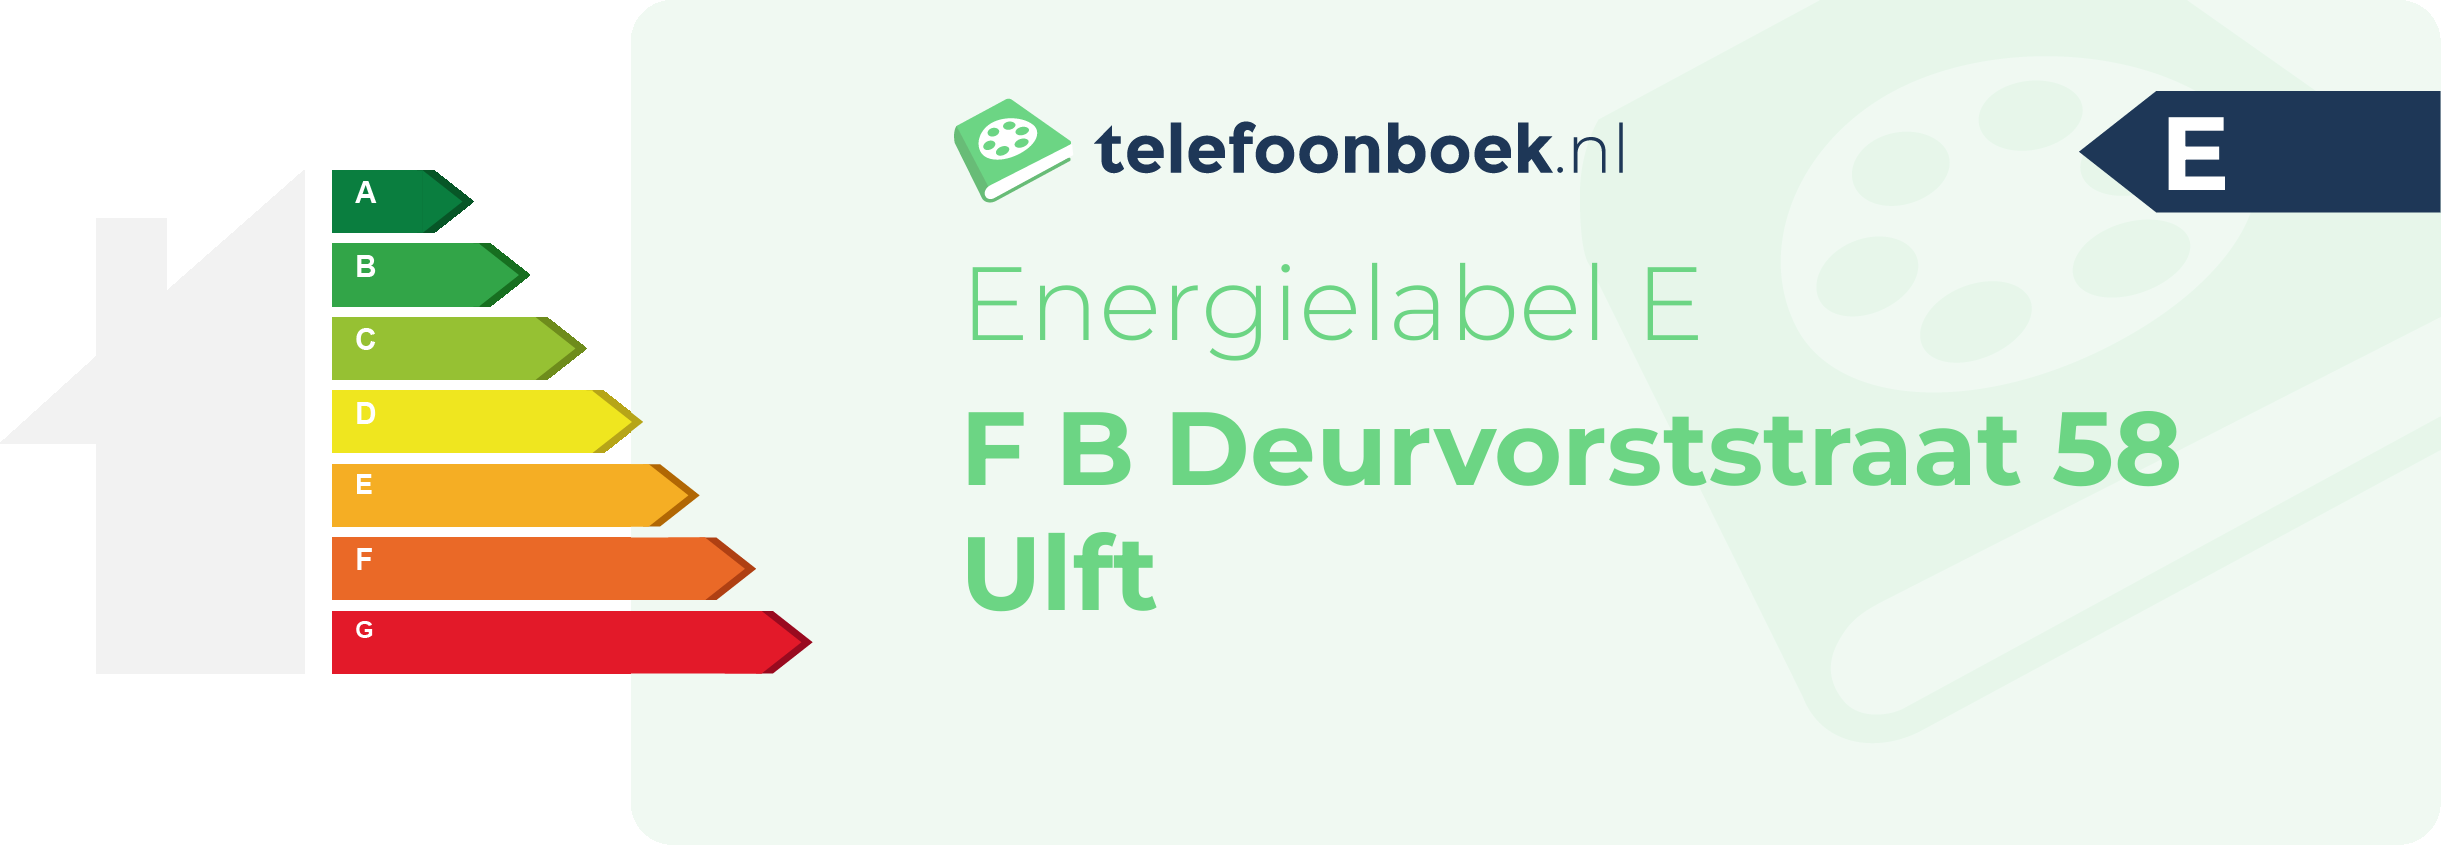 Energielabel F B Deurvorststraat 58 Ulft